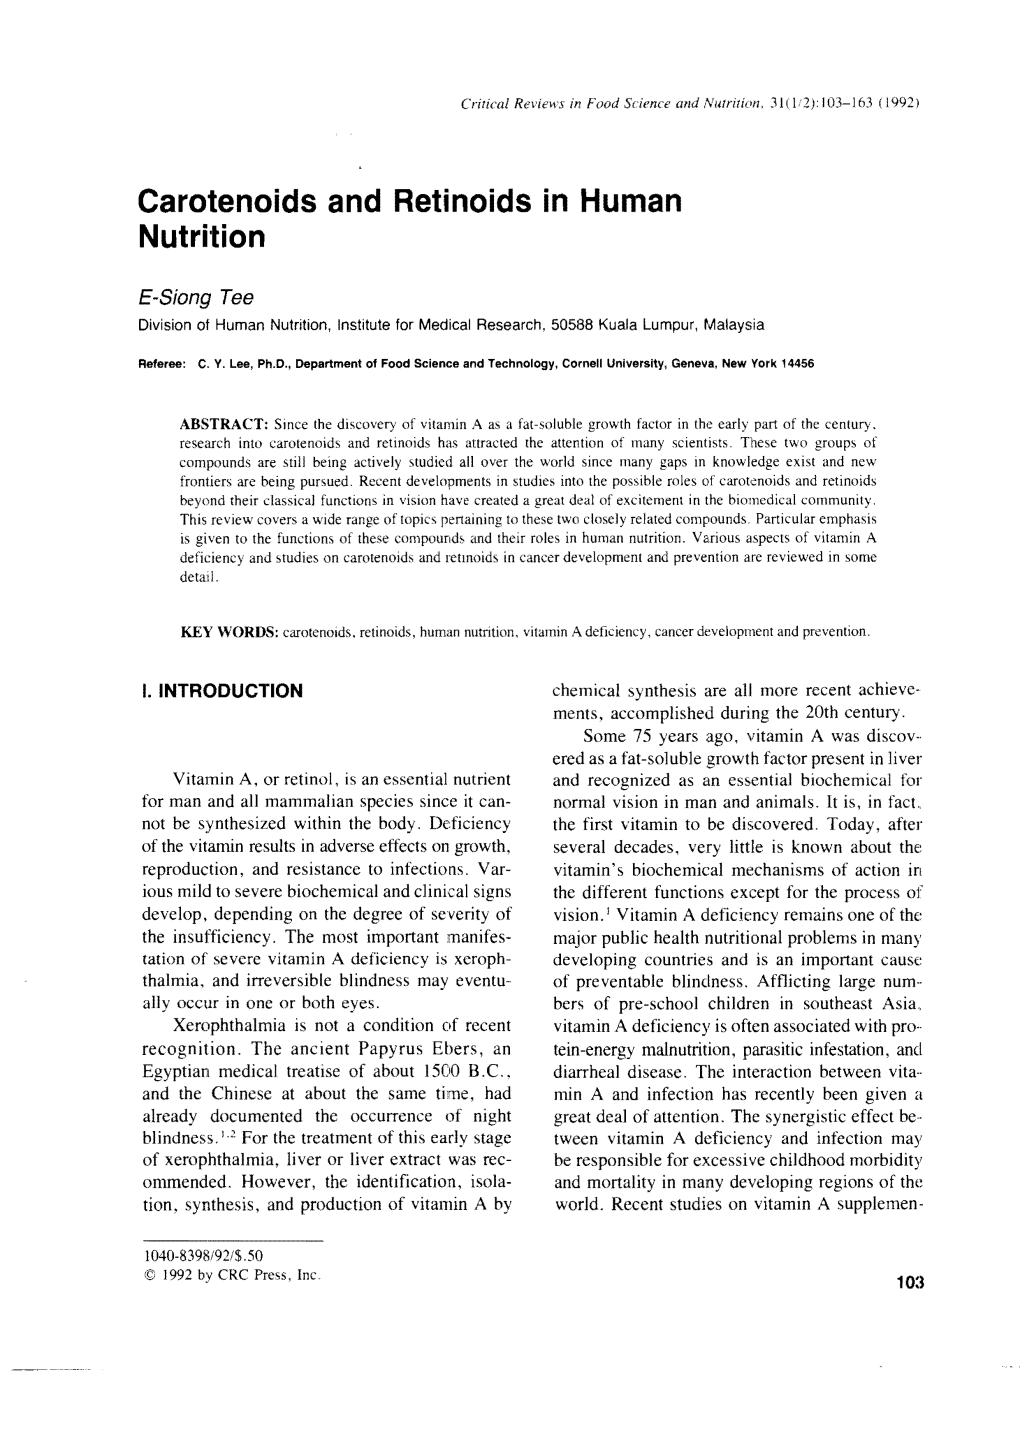 Carotenoids and Retinoids in Human Nutrition